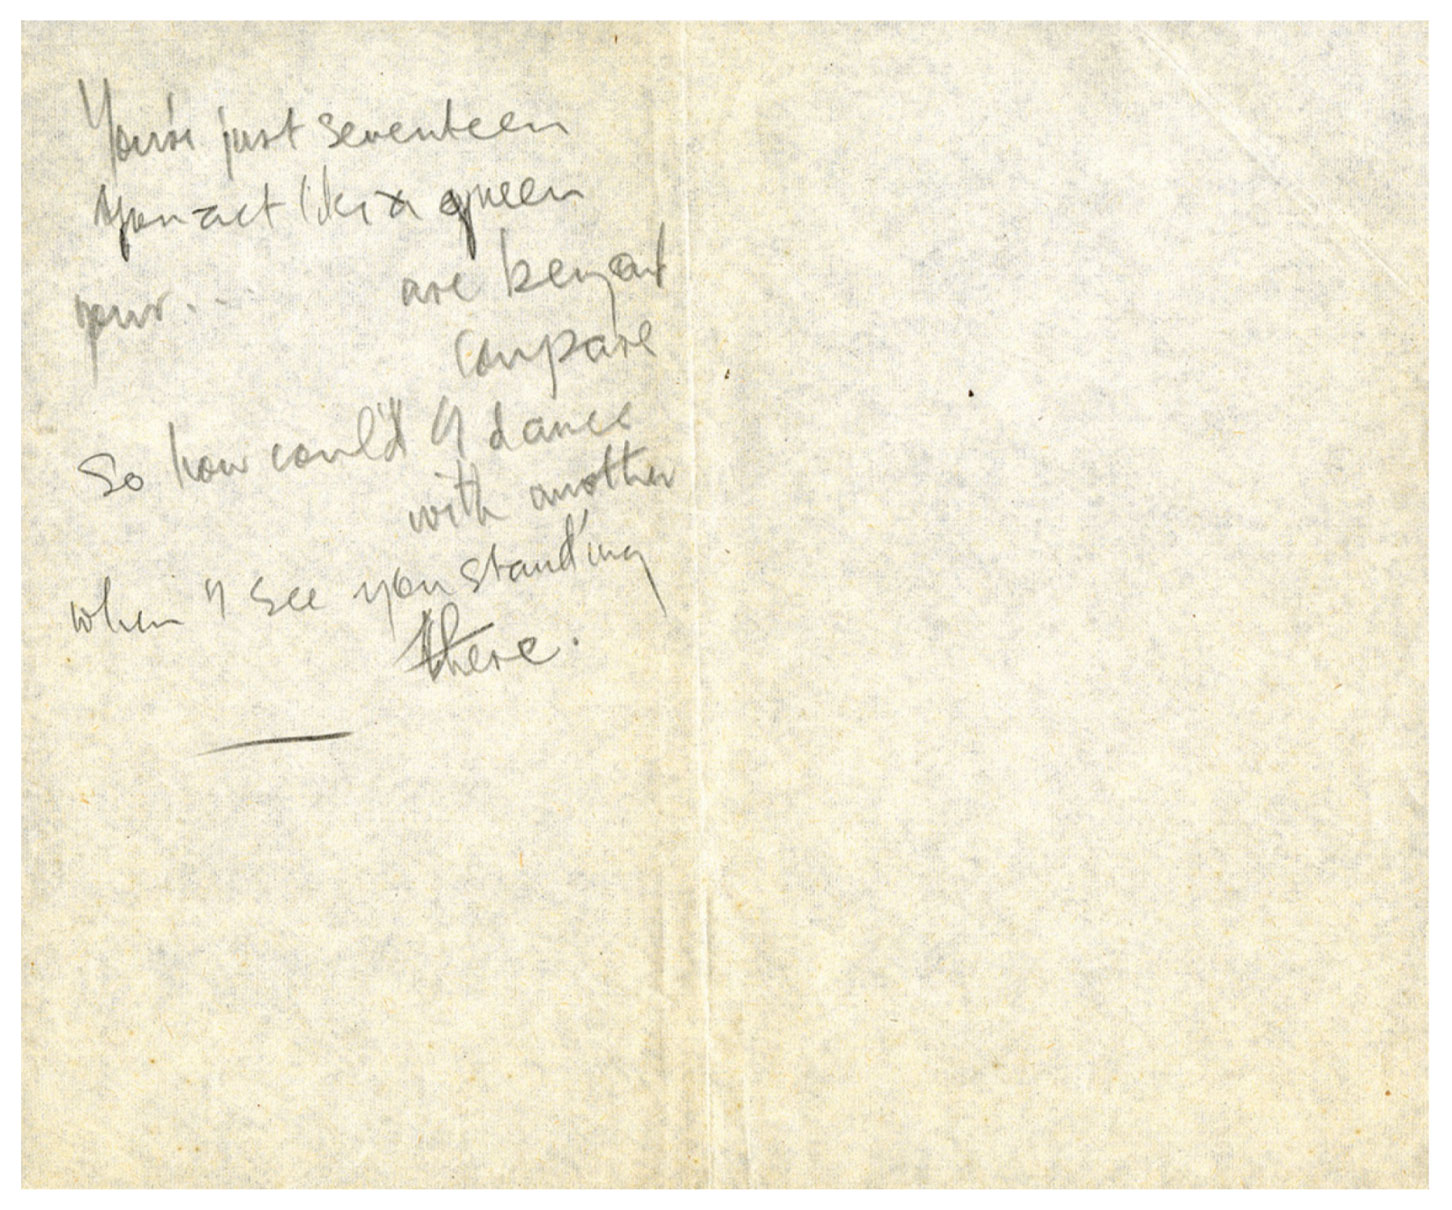 John Lennon Woman Song Lyric Vintage Quote Print - Red Heart Print